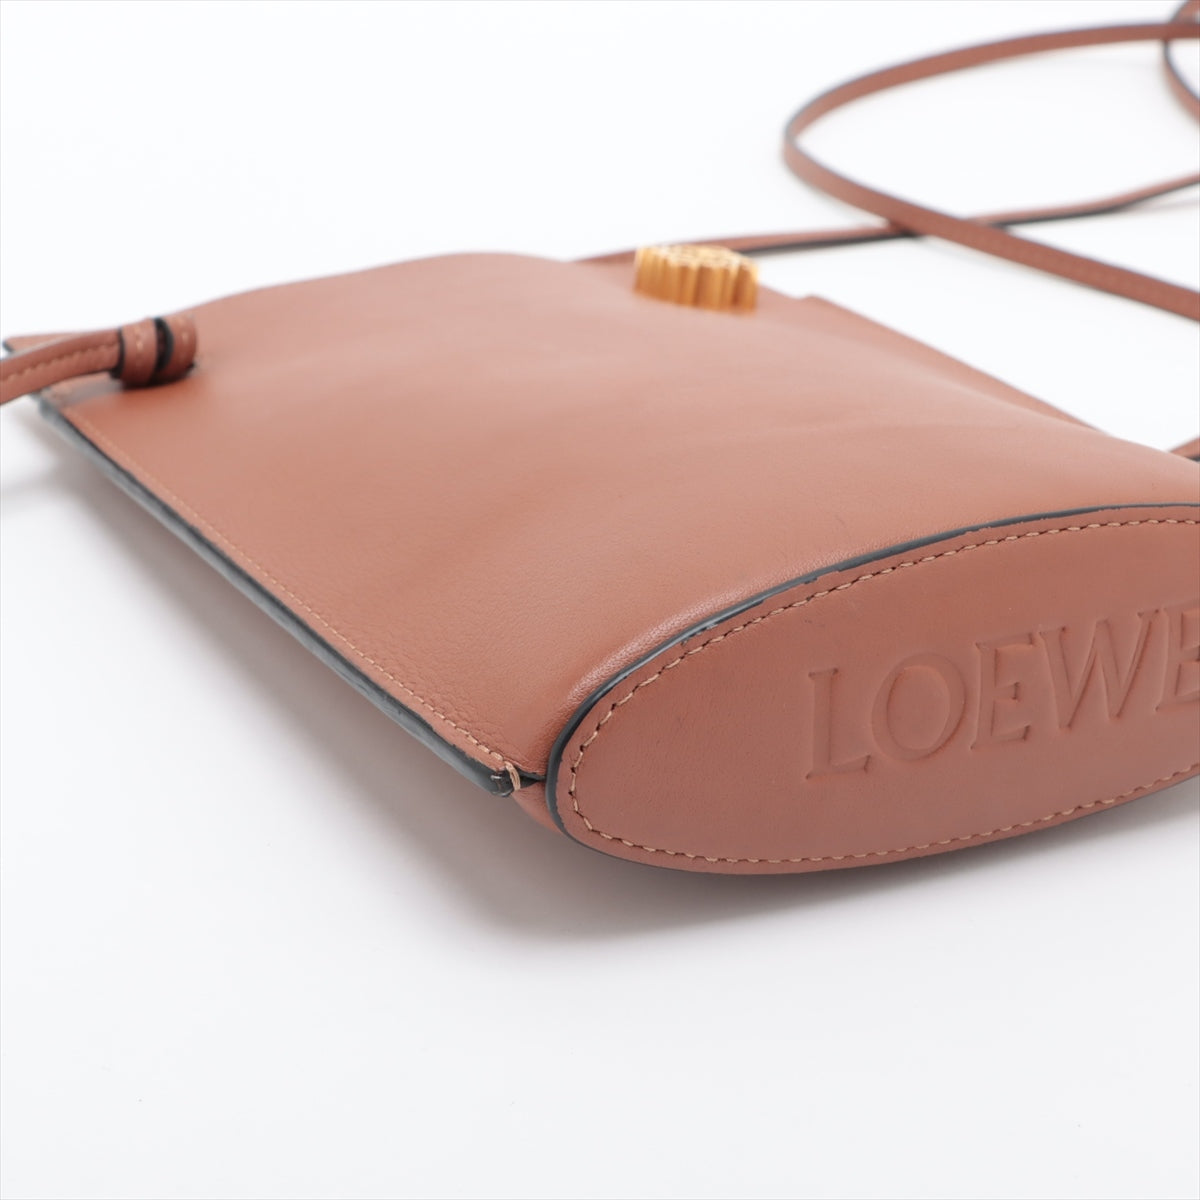 Loewe dice pocket Leather Shoulder bag Brown